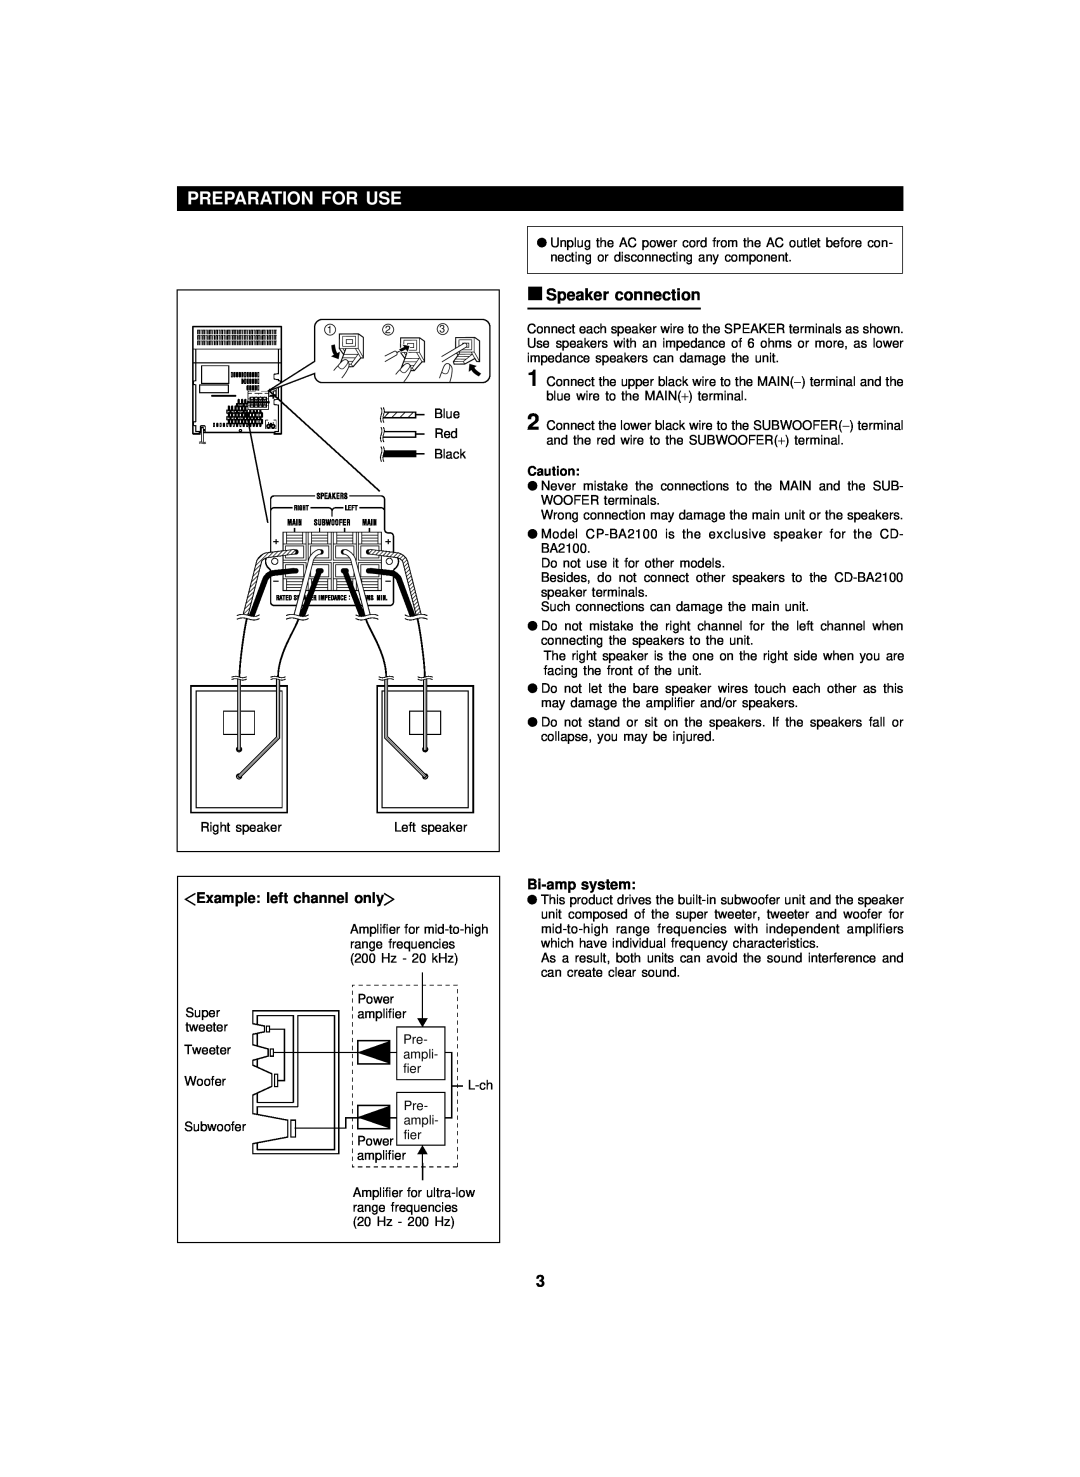 Sharp CD-BA2100 operation manual Preparation For Use, Speaker connection, ZExample left channel onlyY, Bi-ampsystem 